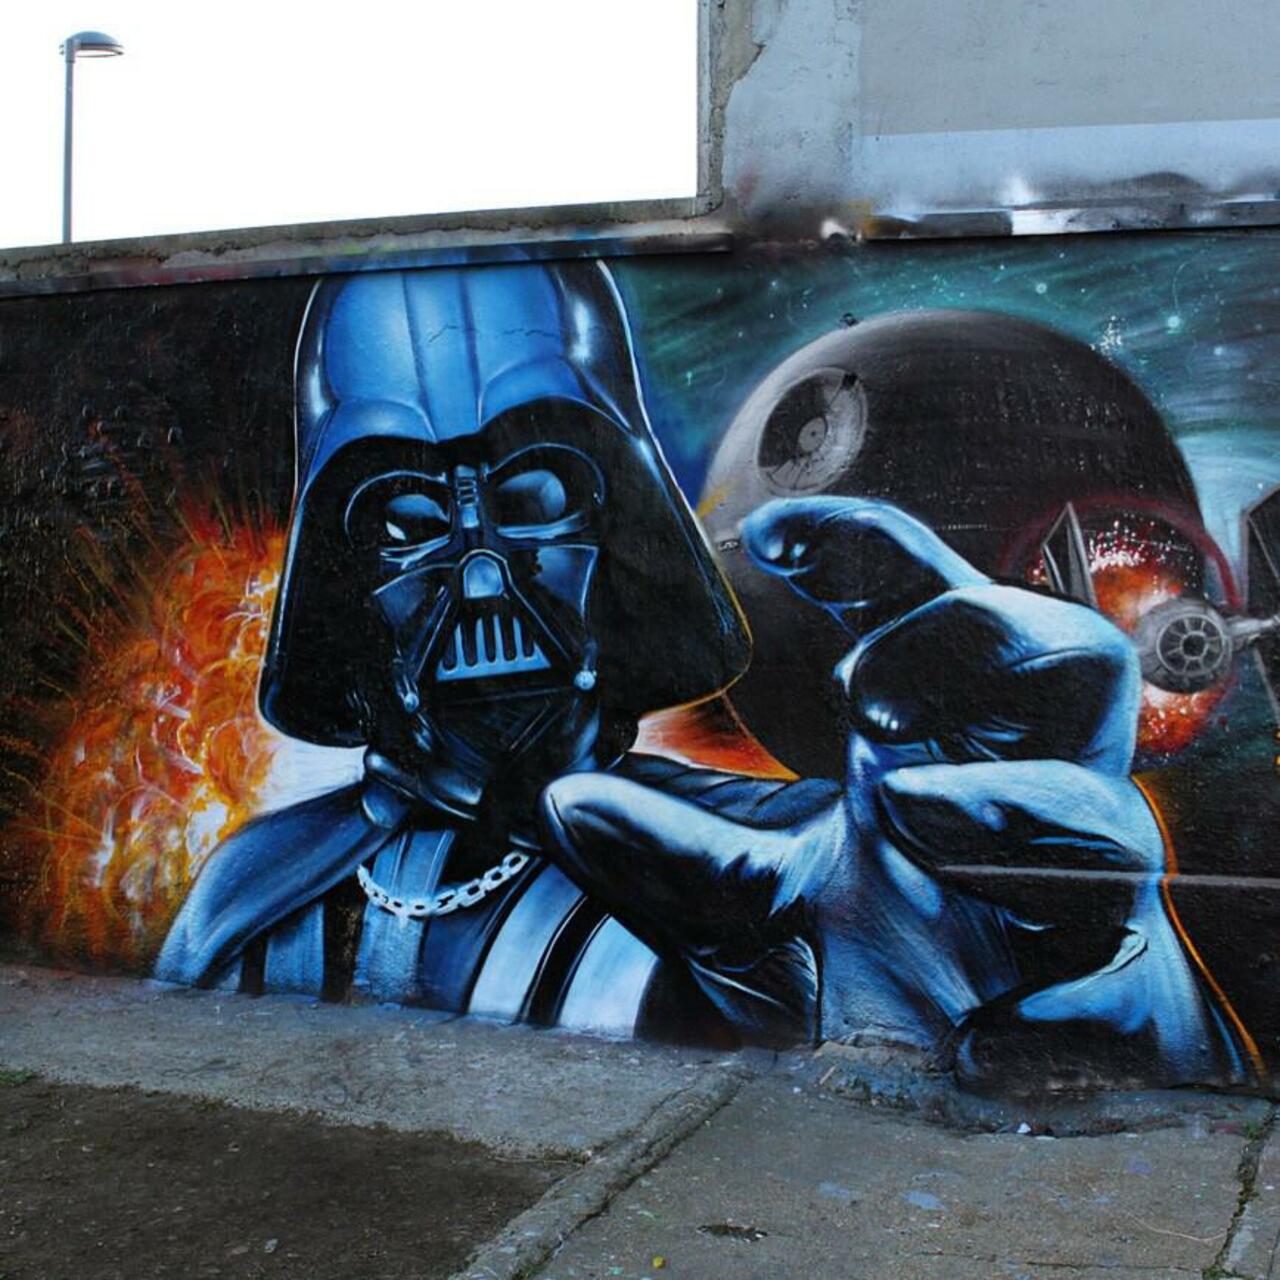 RT @QueGraffiti: Darth Vader 
Artista: FlowOne
París, France.
#art #streetart #mural #graffiti http://t.co/x9FyJw9xyg